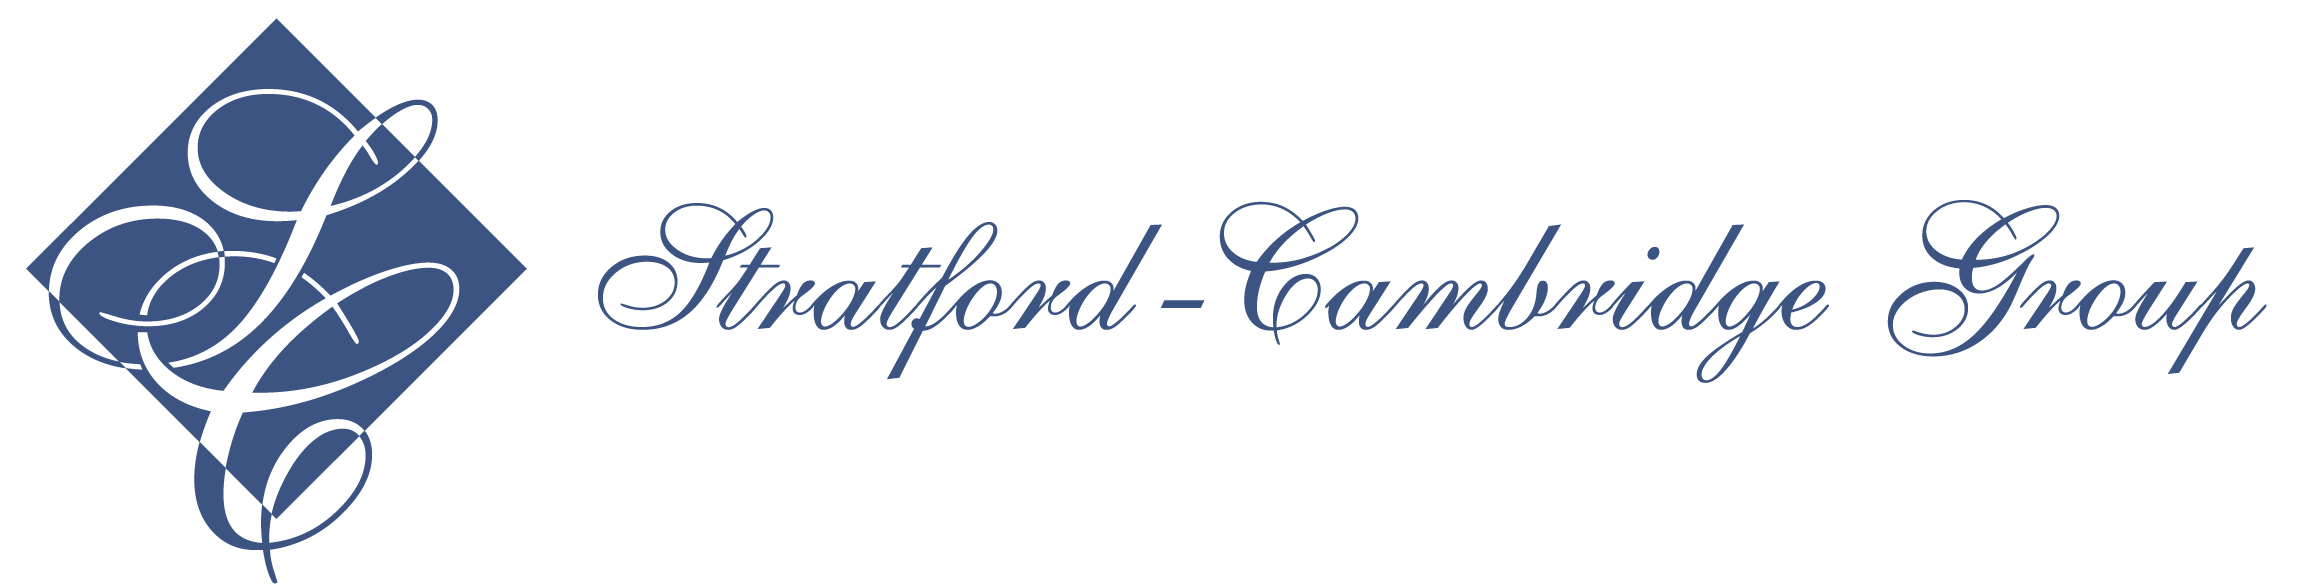 Stratford-Cambridge Group